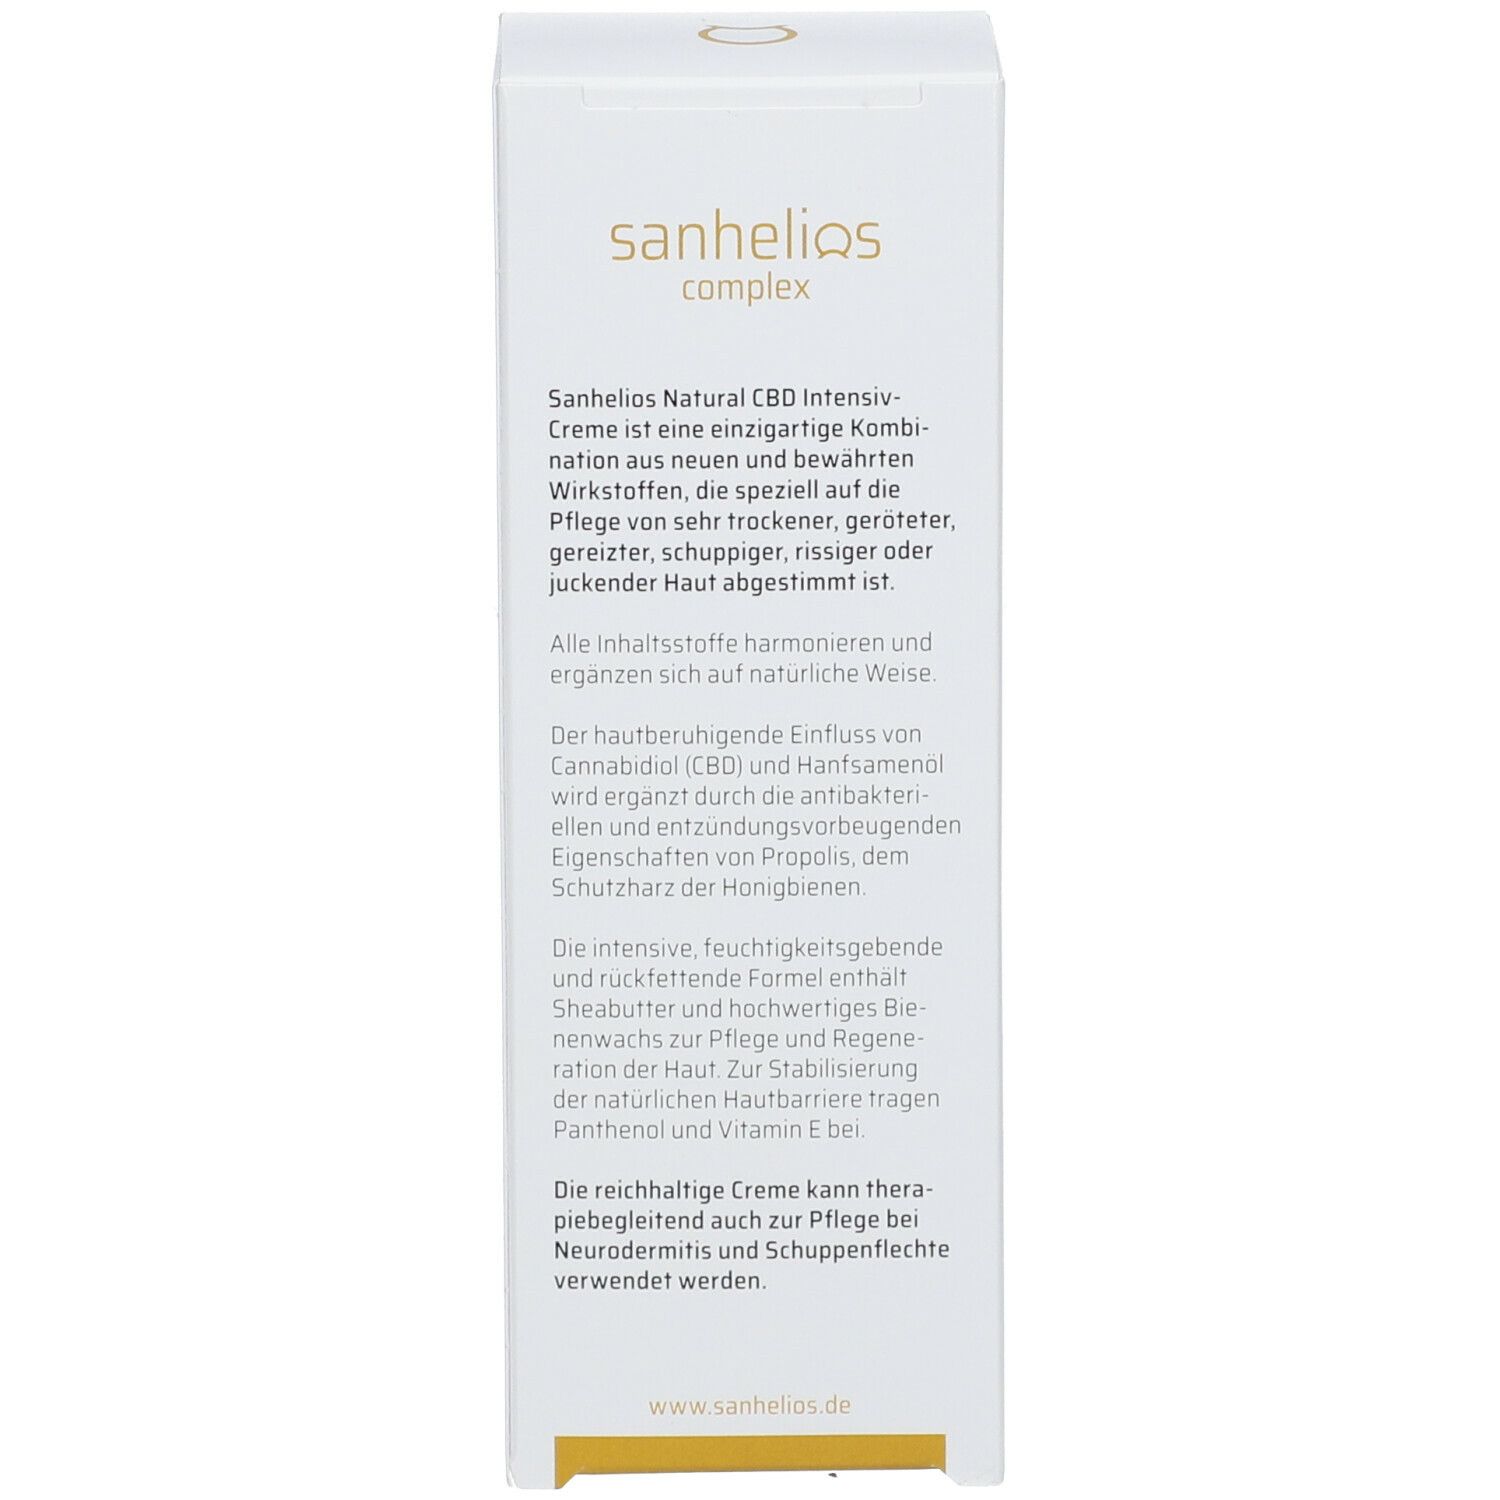 sanhelios® Natural CBD Intensive-Creme